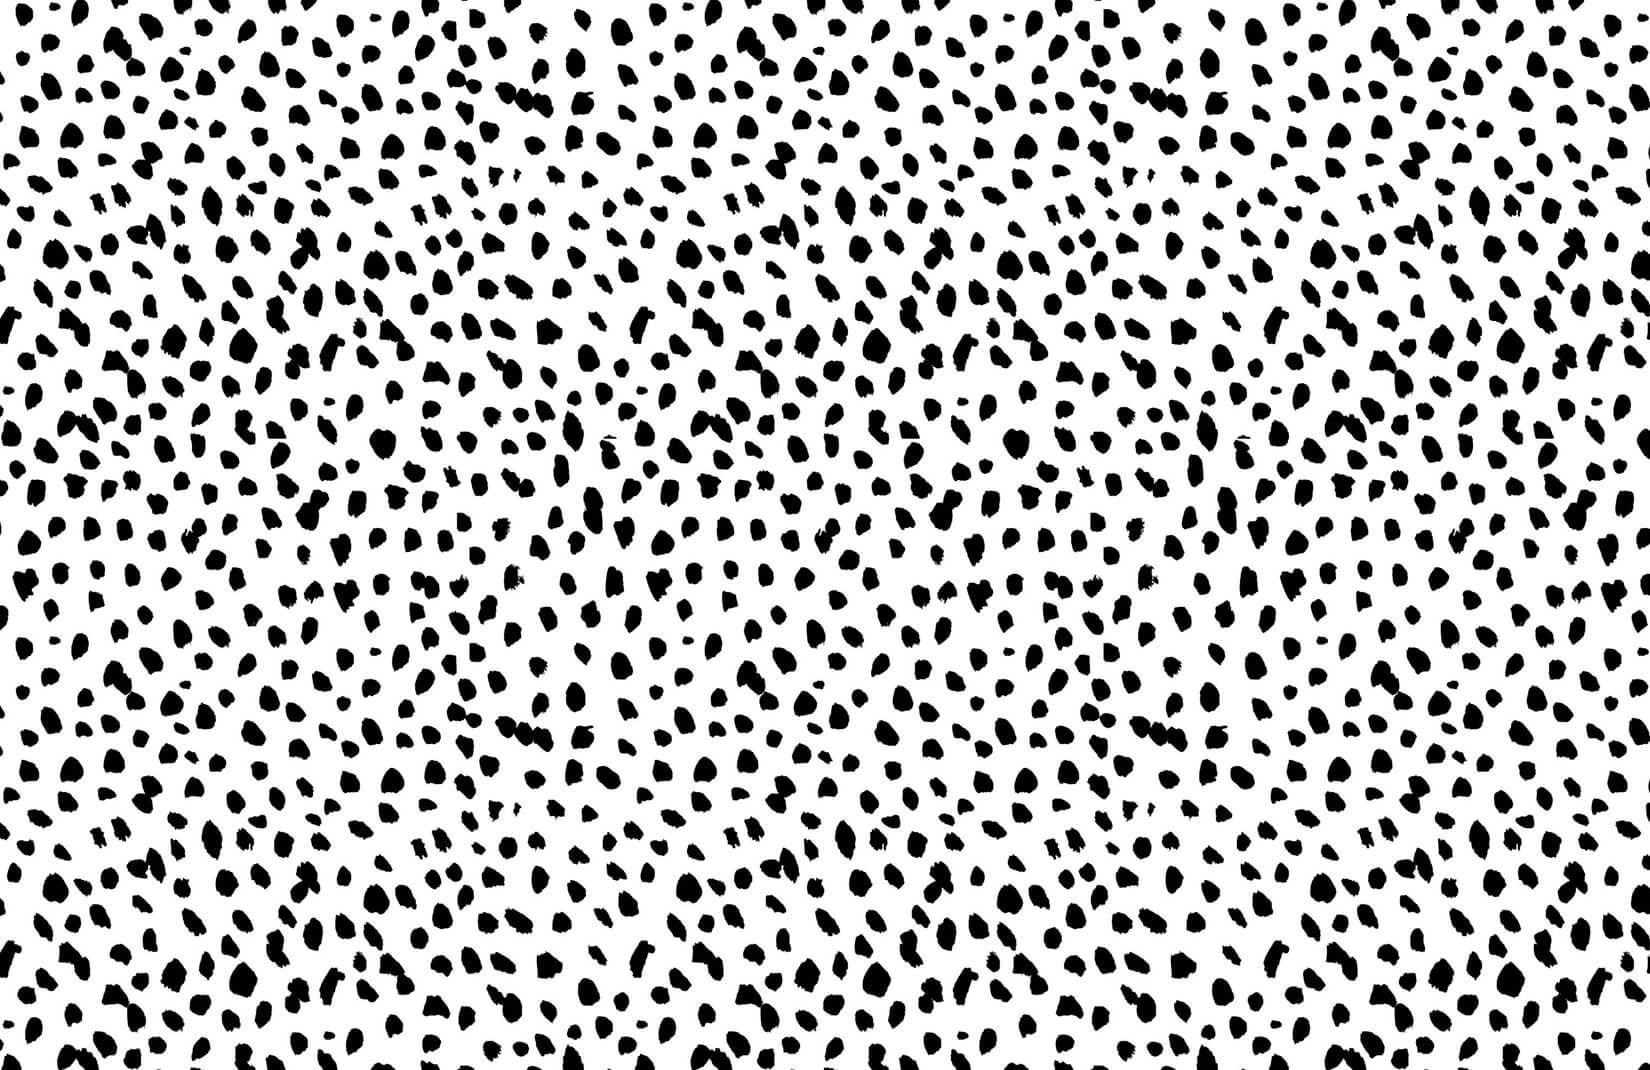 Black & White Dalmatian Print Wallpaper Mural. Murals Wallpaper. Cheetah print wallpaper, Leopard print wallpaper, Polka dots wallpaper